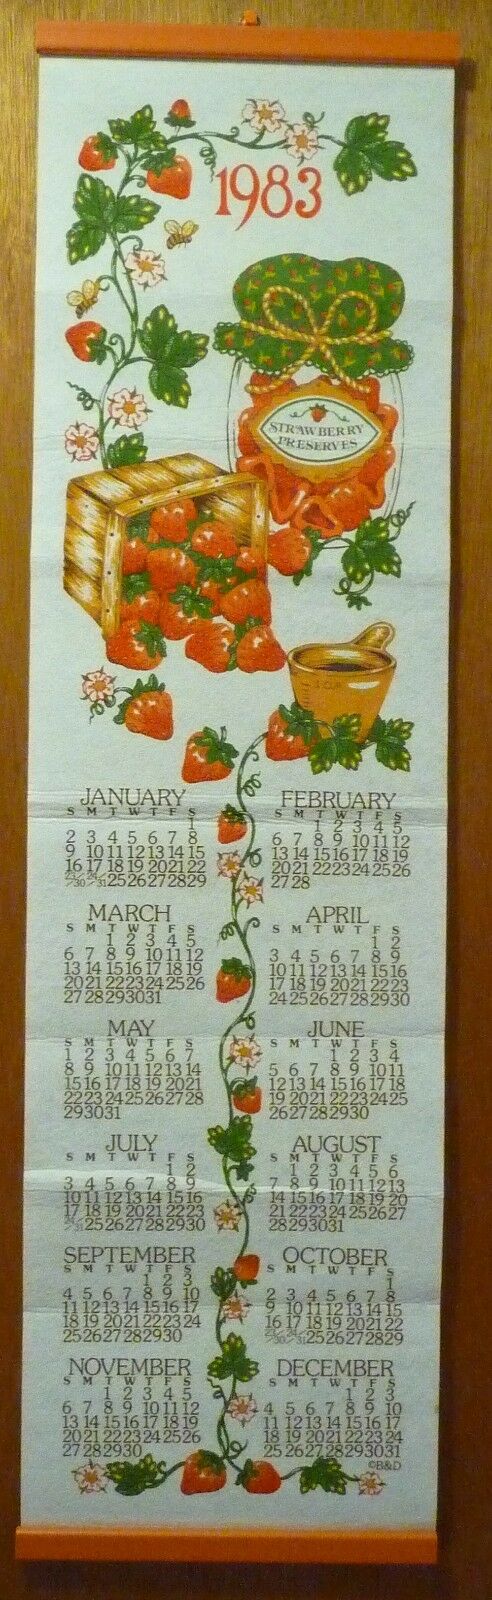 1983 Felt Calendar, Strawberry preserves design